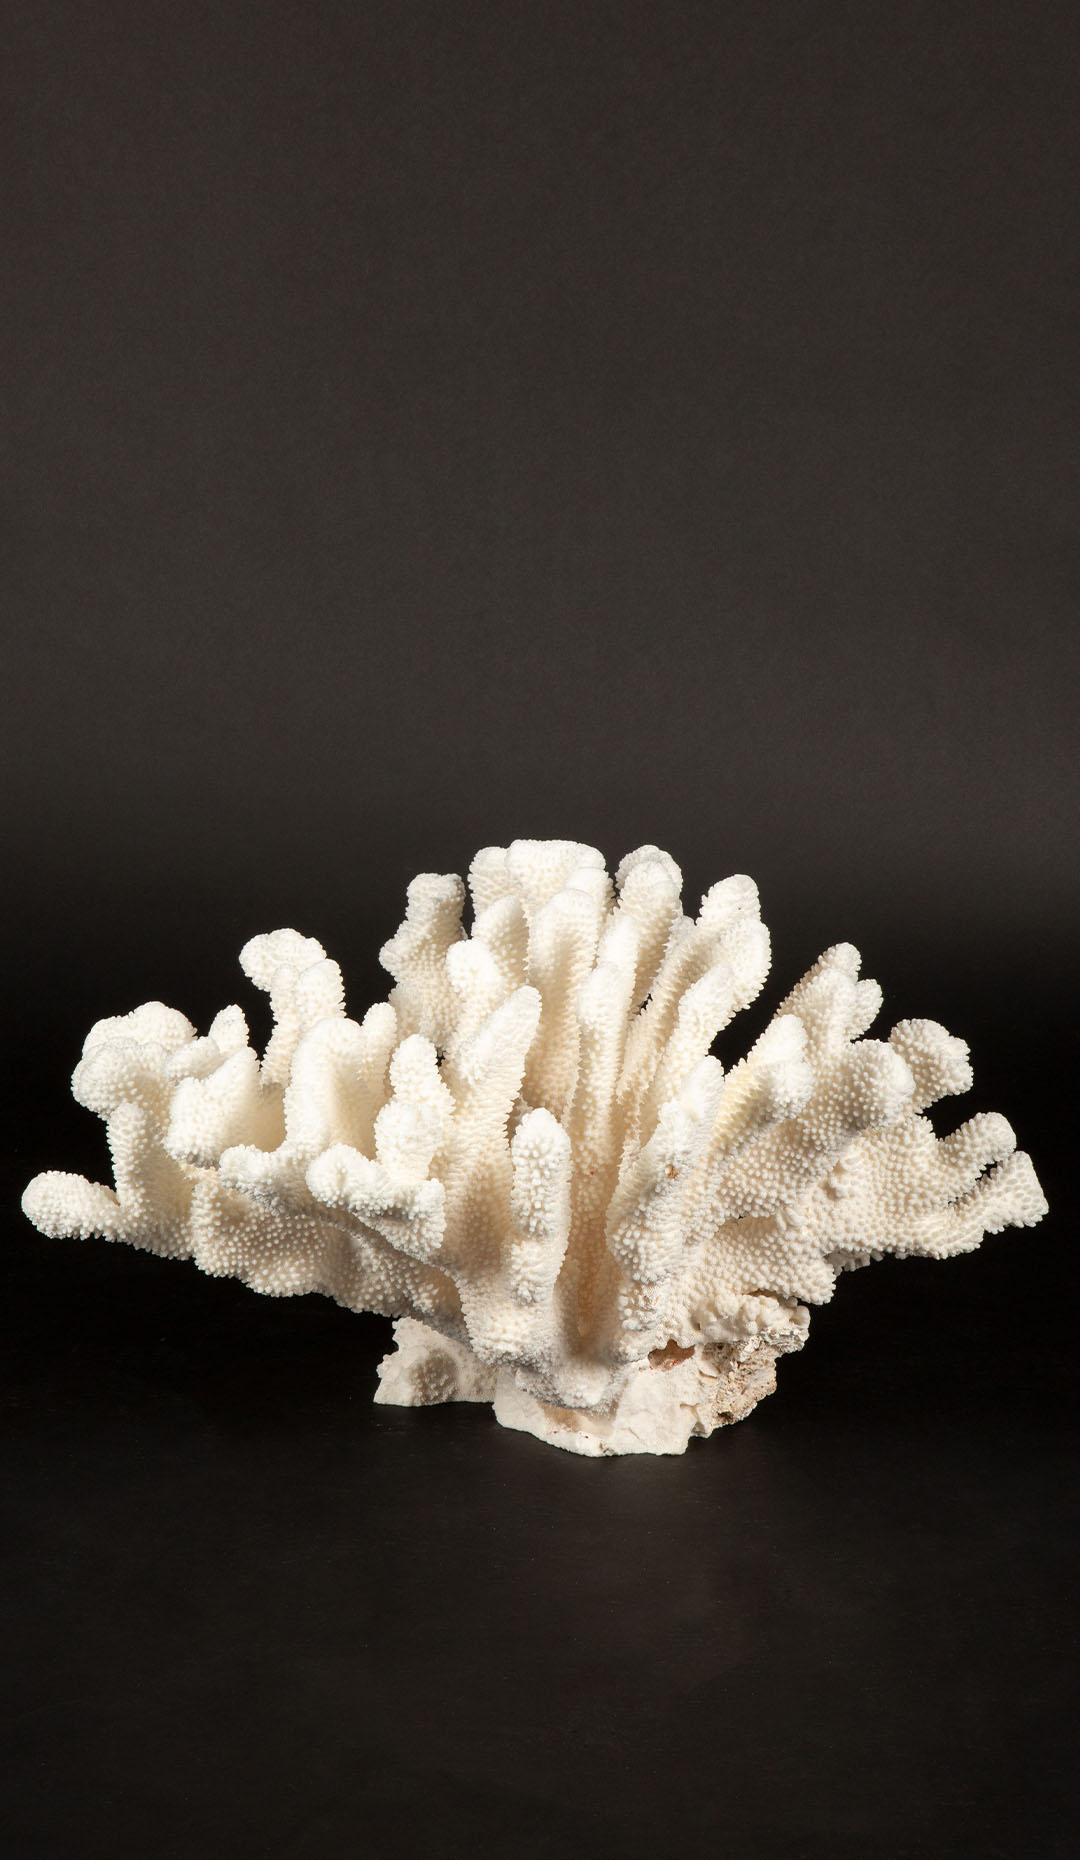 Massive Cauliflower Coral Specimen 21.5